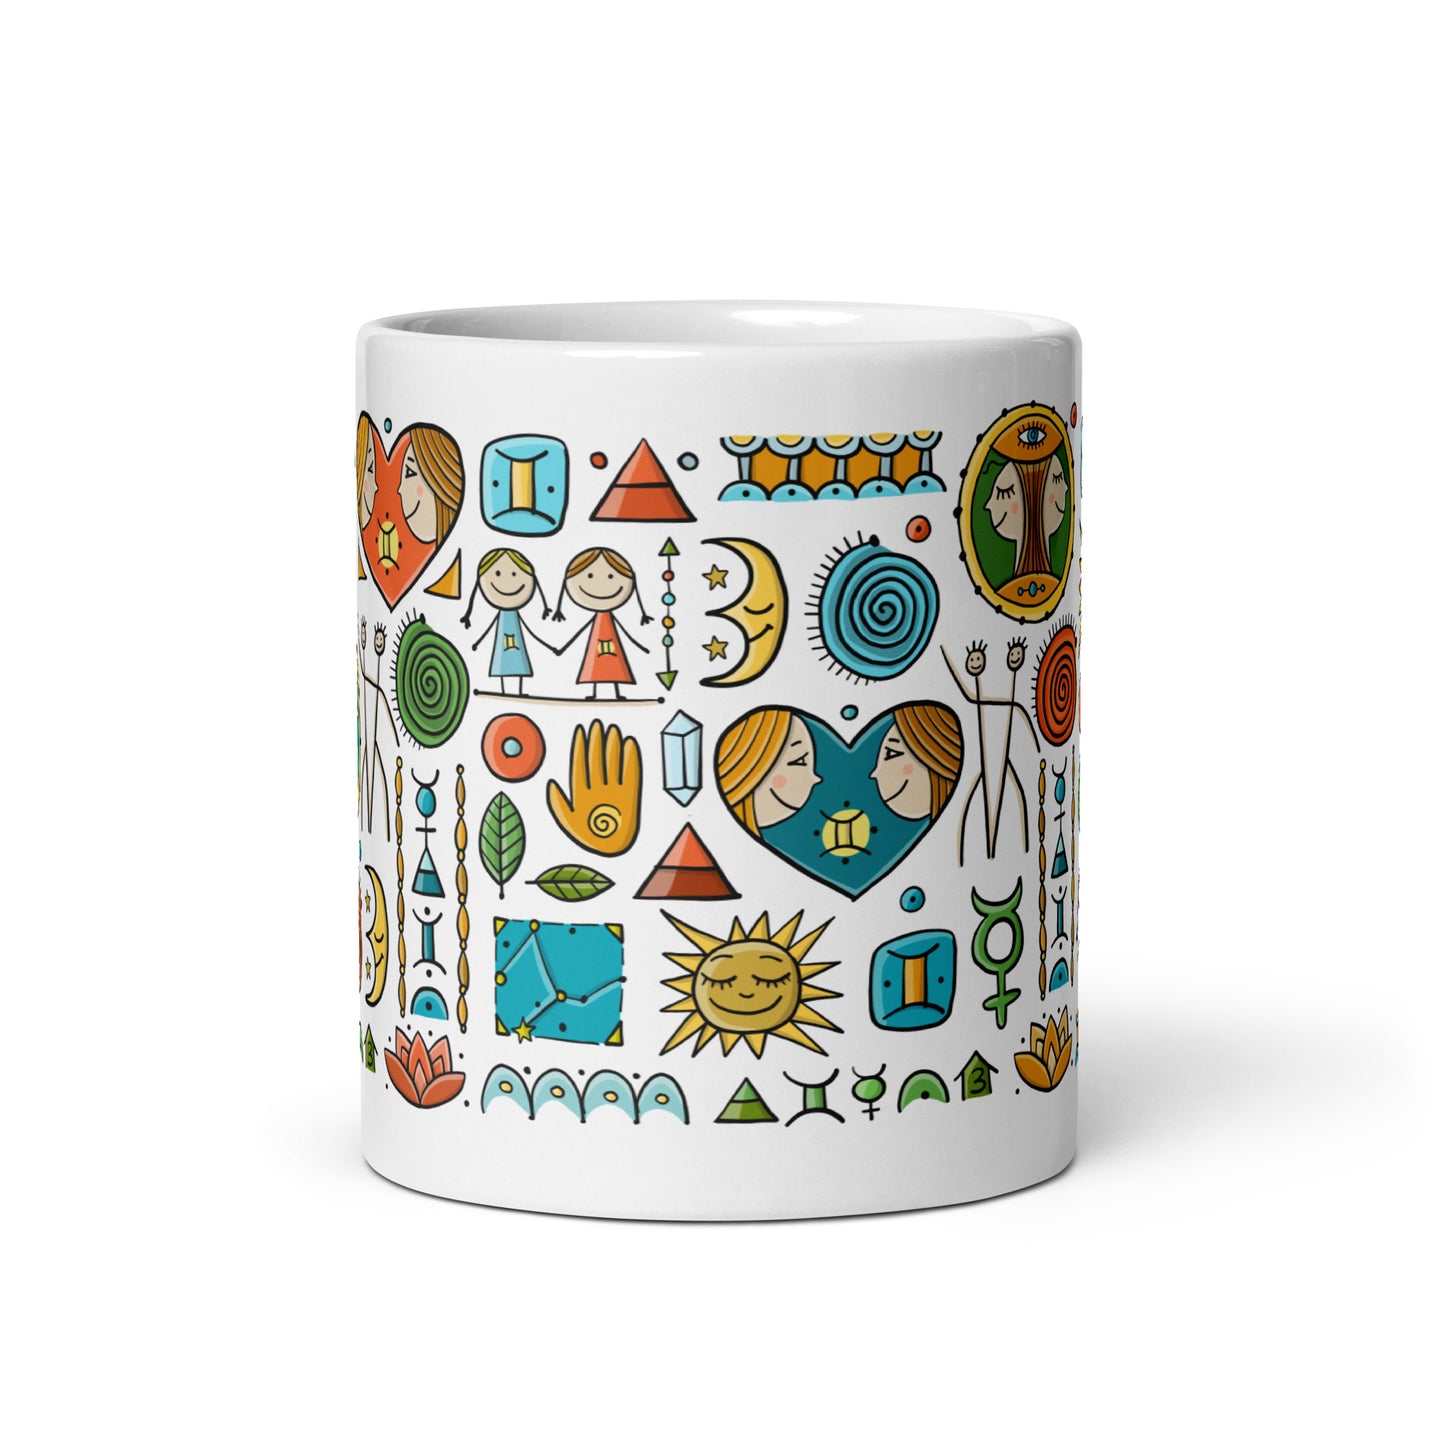 Gemini Zodiac Mug 11 oz: A white ceramic mug featuring a Gemini zodiac symbol design for astrology enthusiasts. Great gift idea for Gemini.